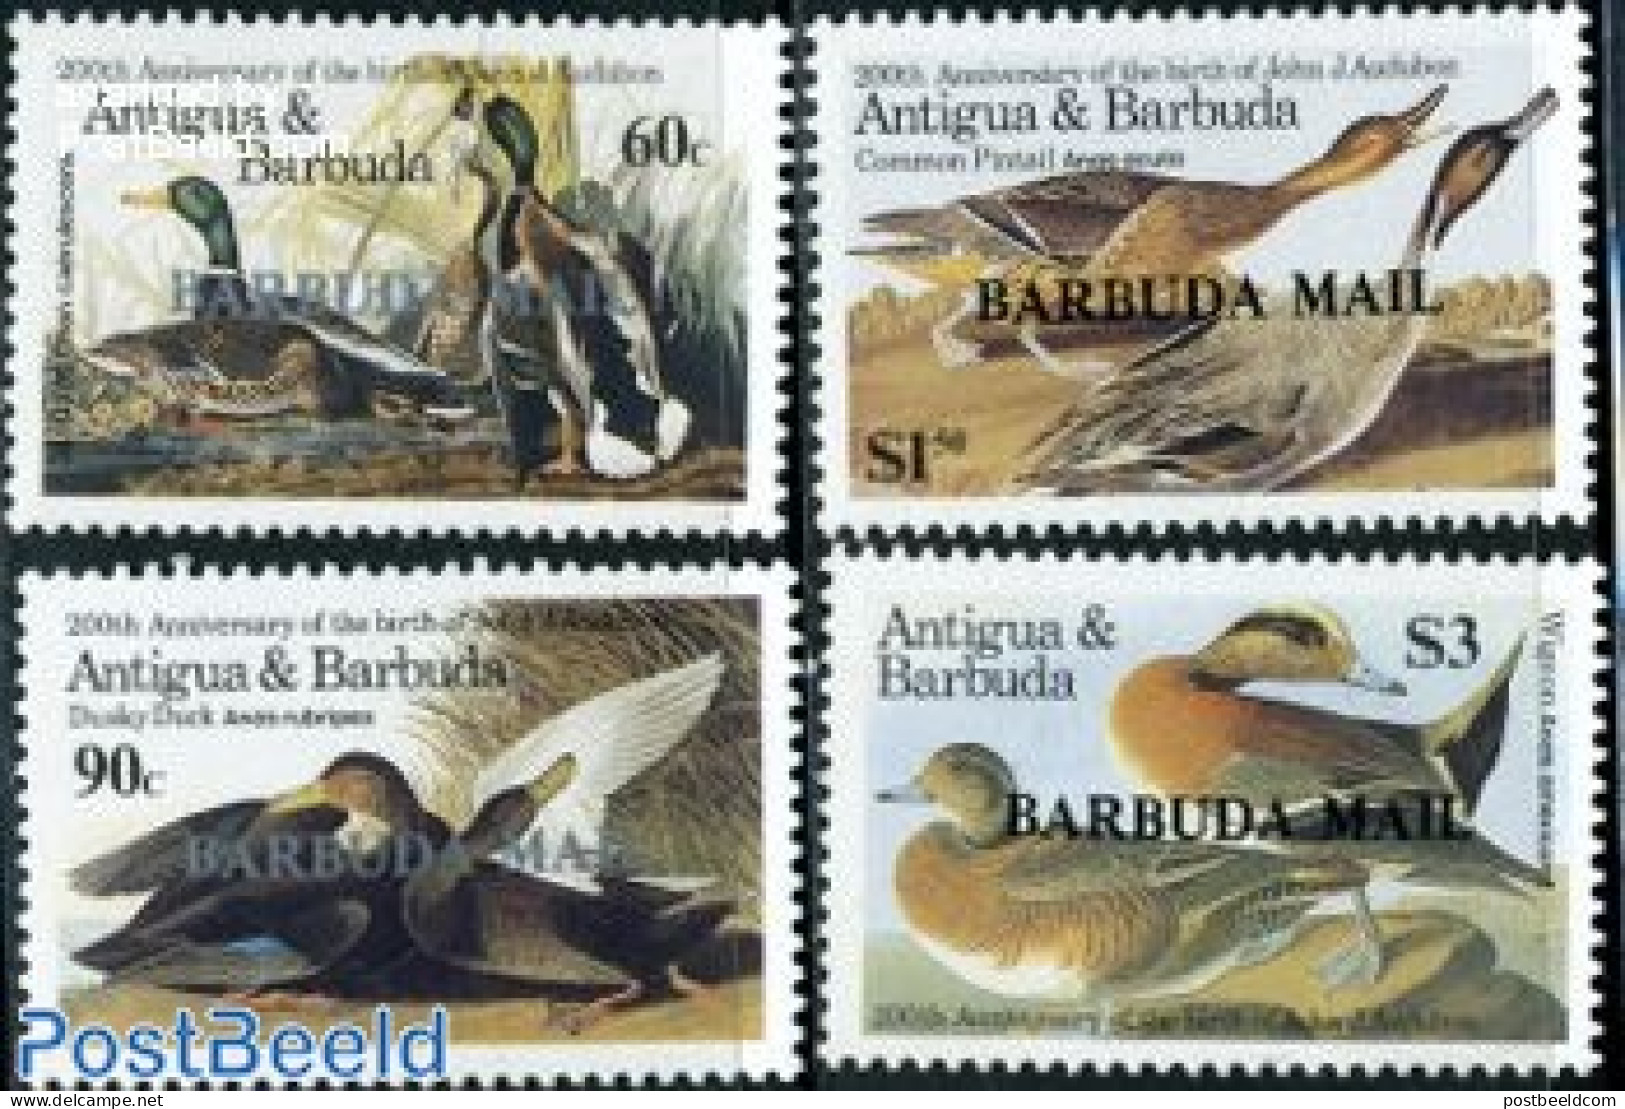 Barbuda 1986 J.J. Audubon 4v, Mint NH, Nature - Birds - Barbuda (...-1981)